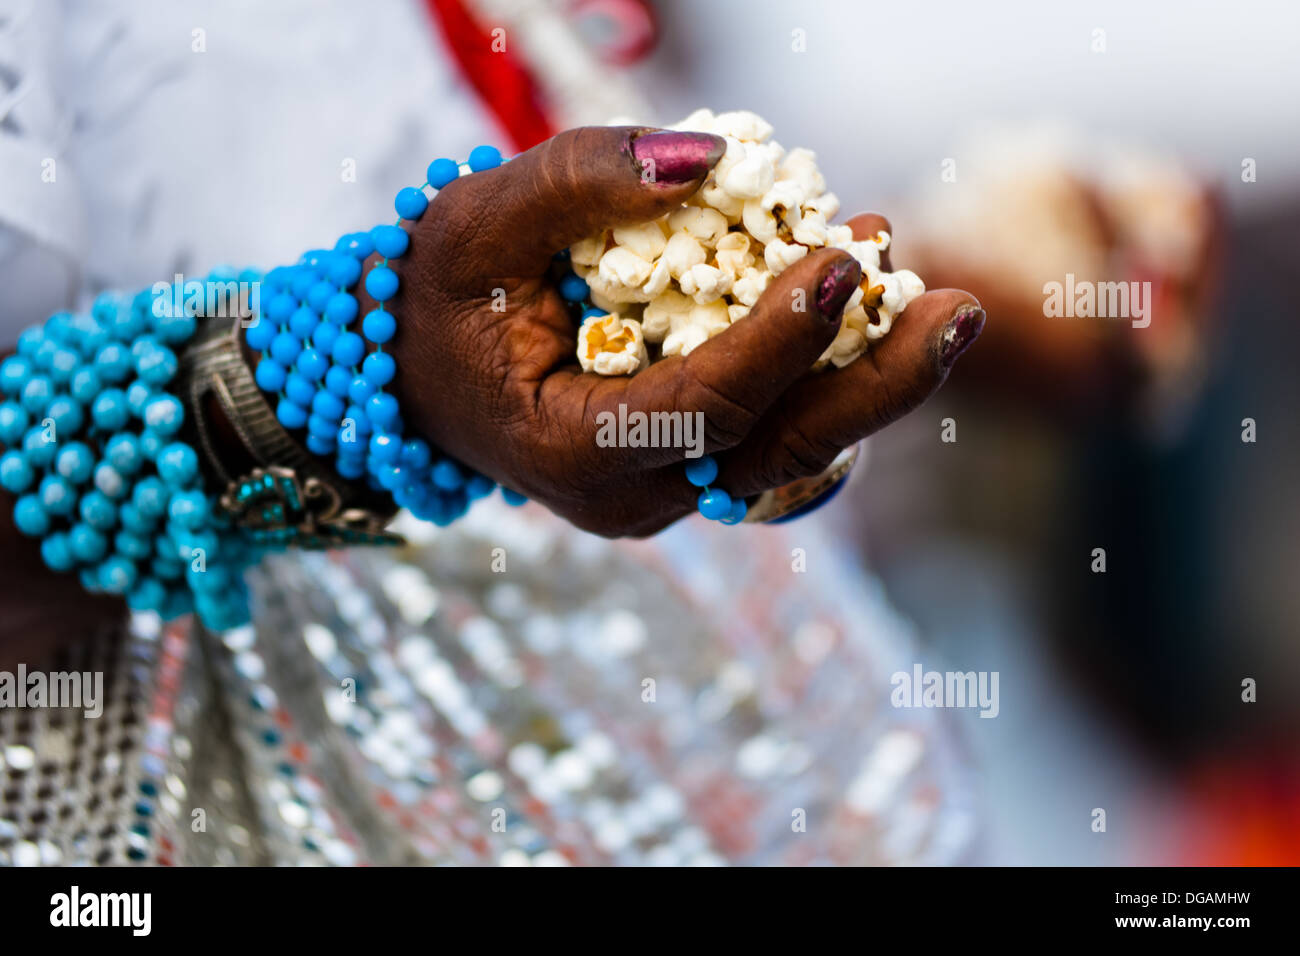 Hands of a Baiana woman seen during the Afro-Brazilian spiritual cleansing ritual performed in Salvador, Bahia, Brazil. Stock Photo